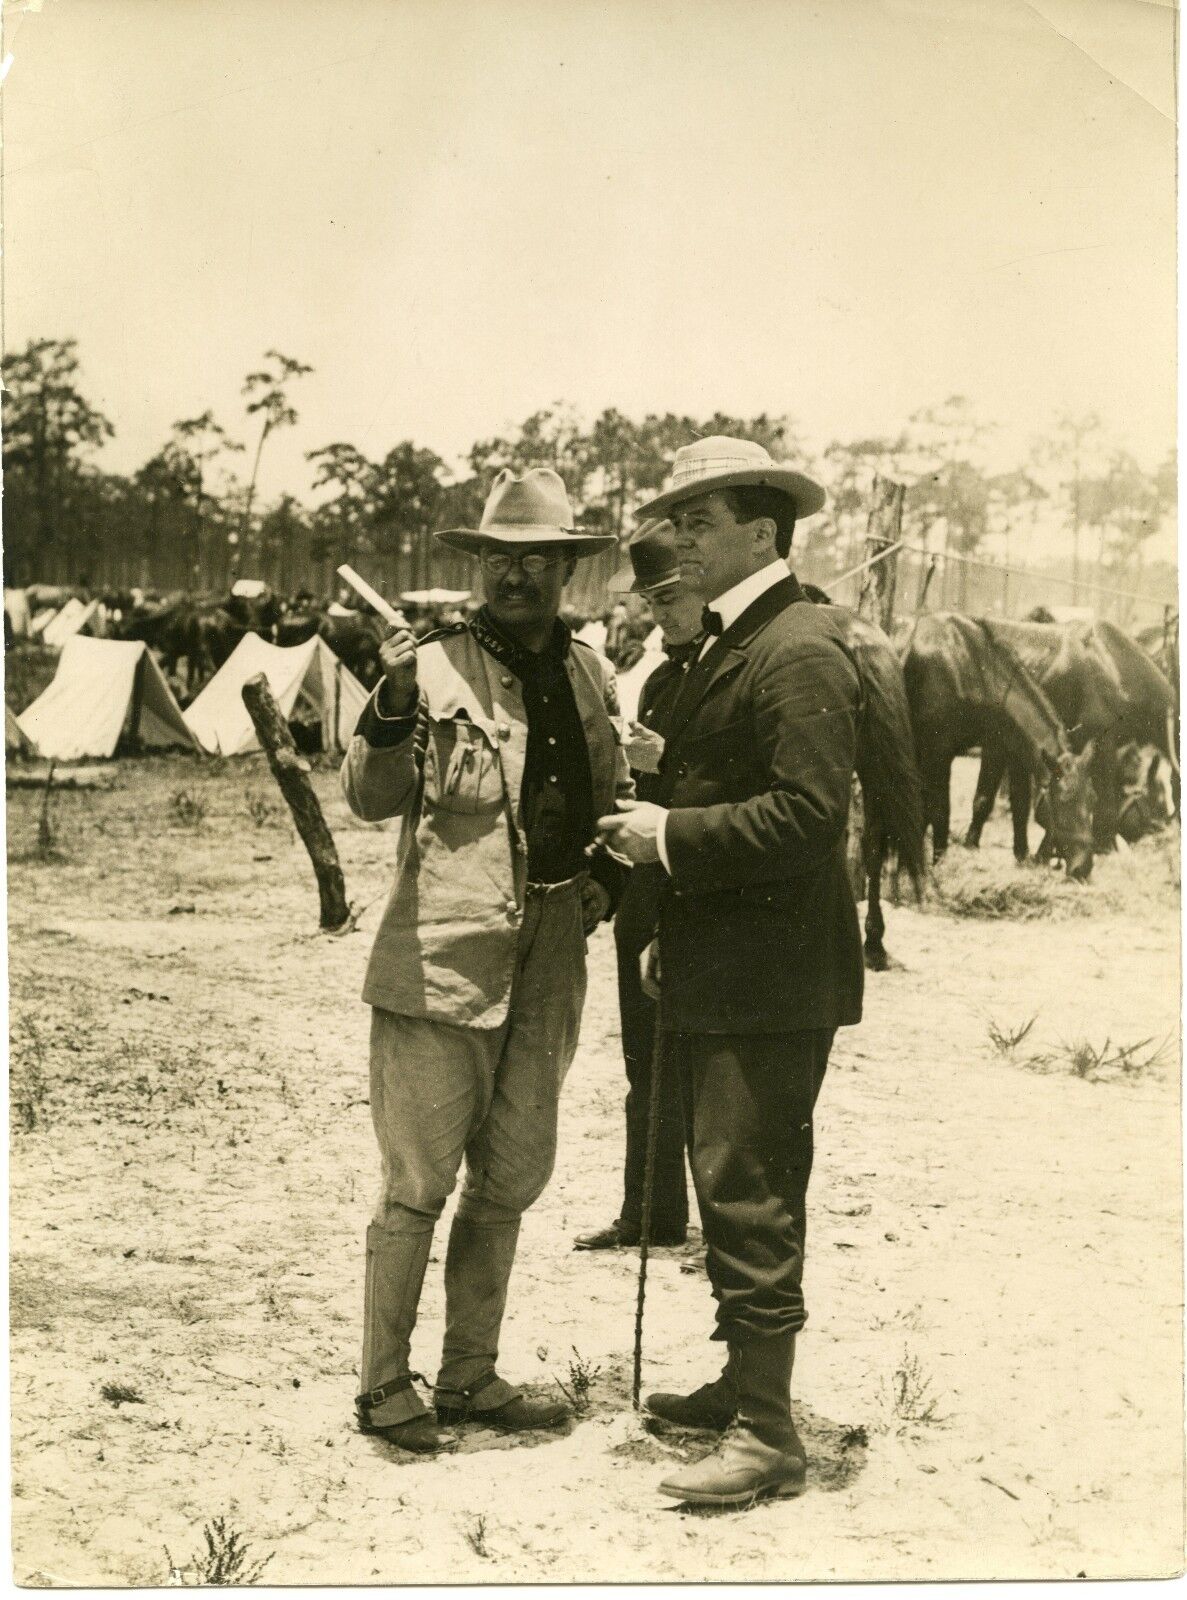 Col. Teddy Roosevelt with Richard Harding Davis Cuba 1926 reprint of 1898 image